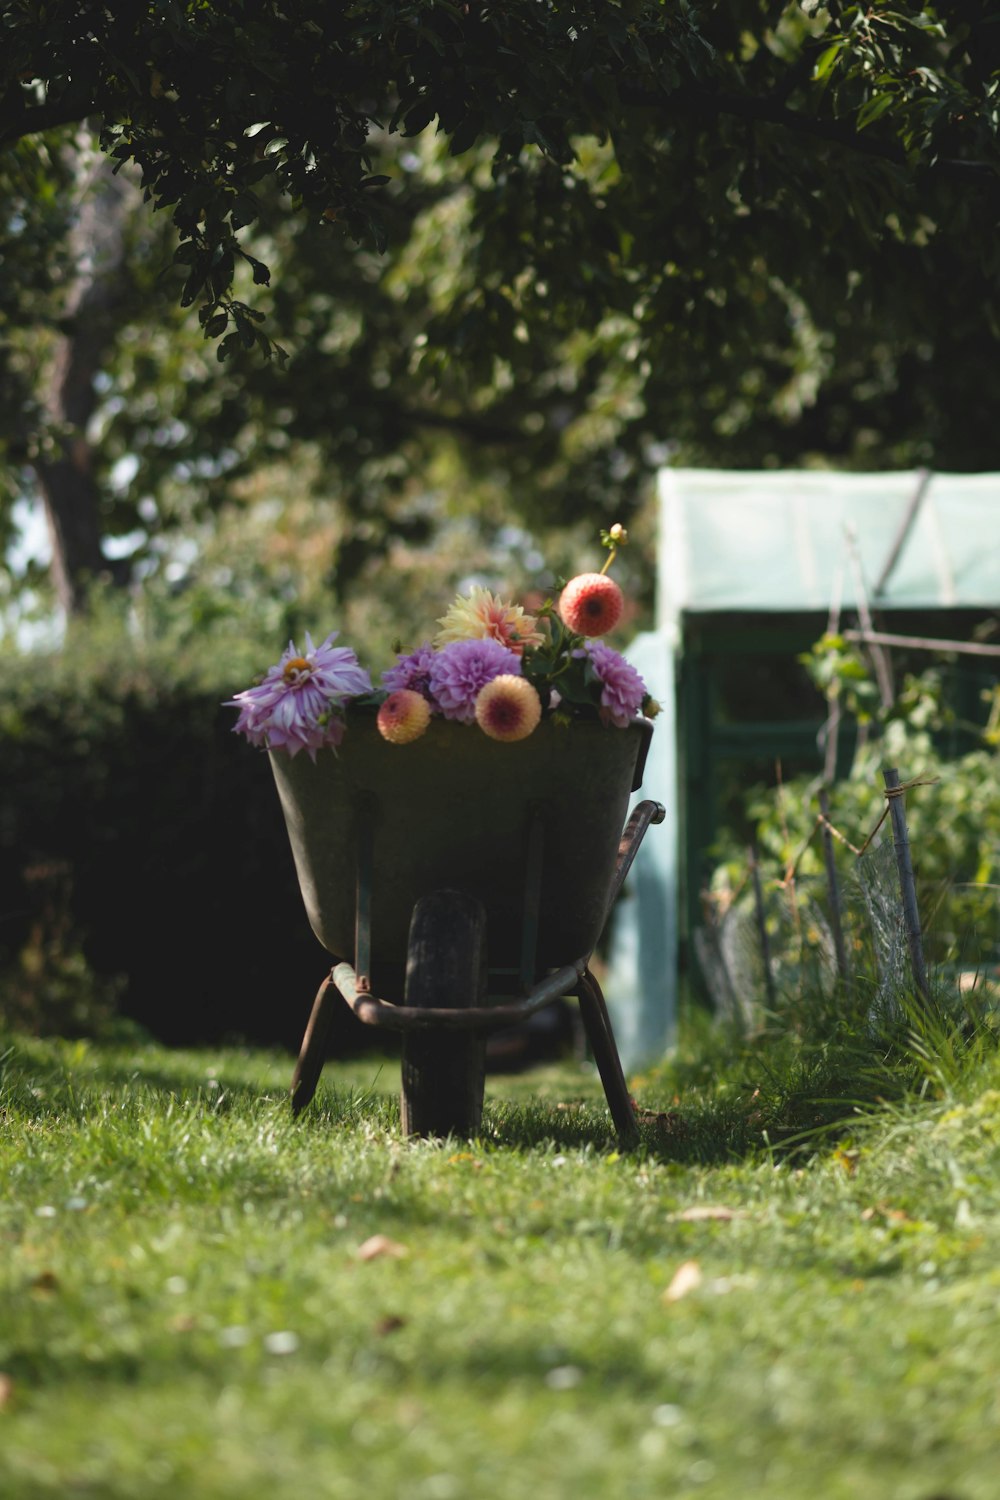 a wheelbarrow filled with flowers in a garden